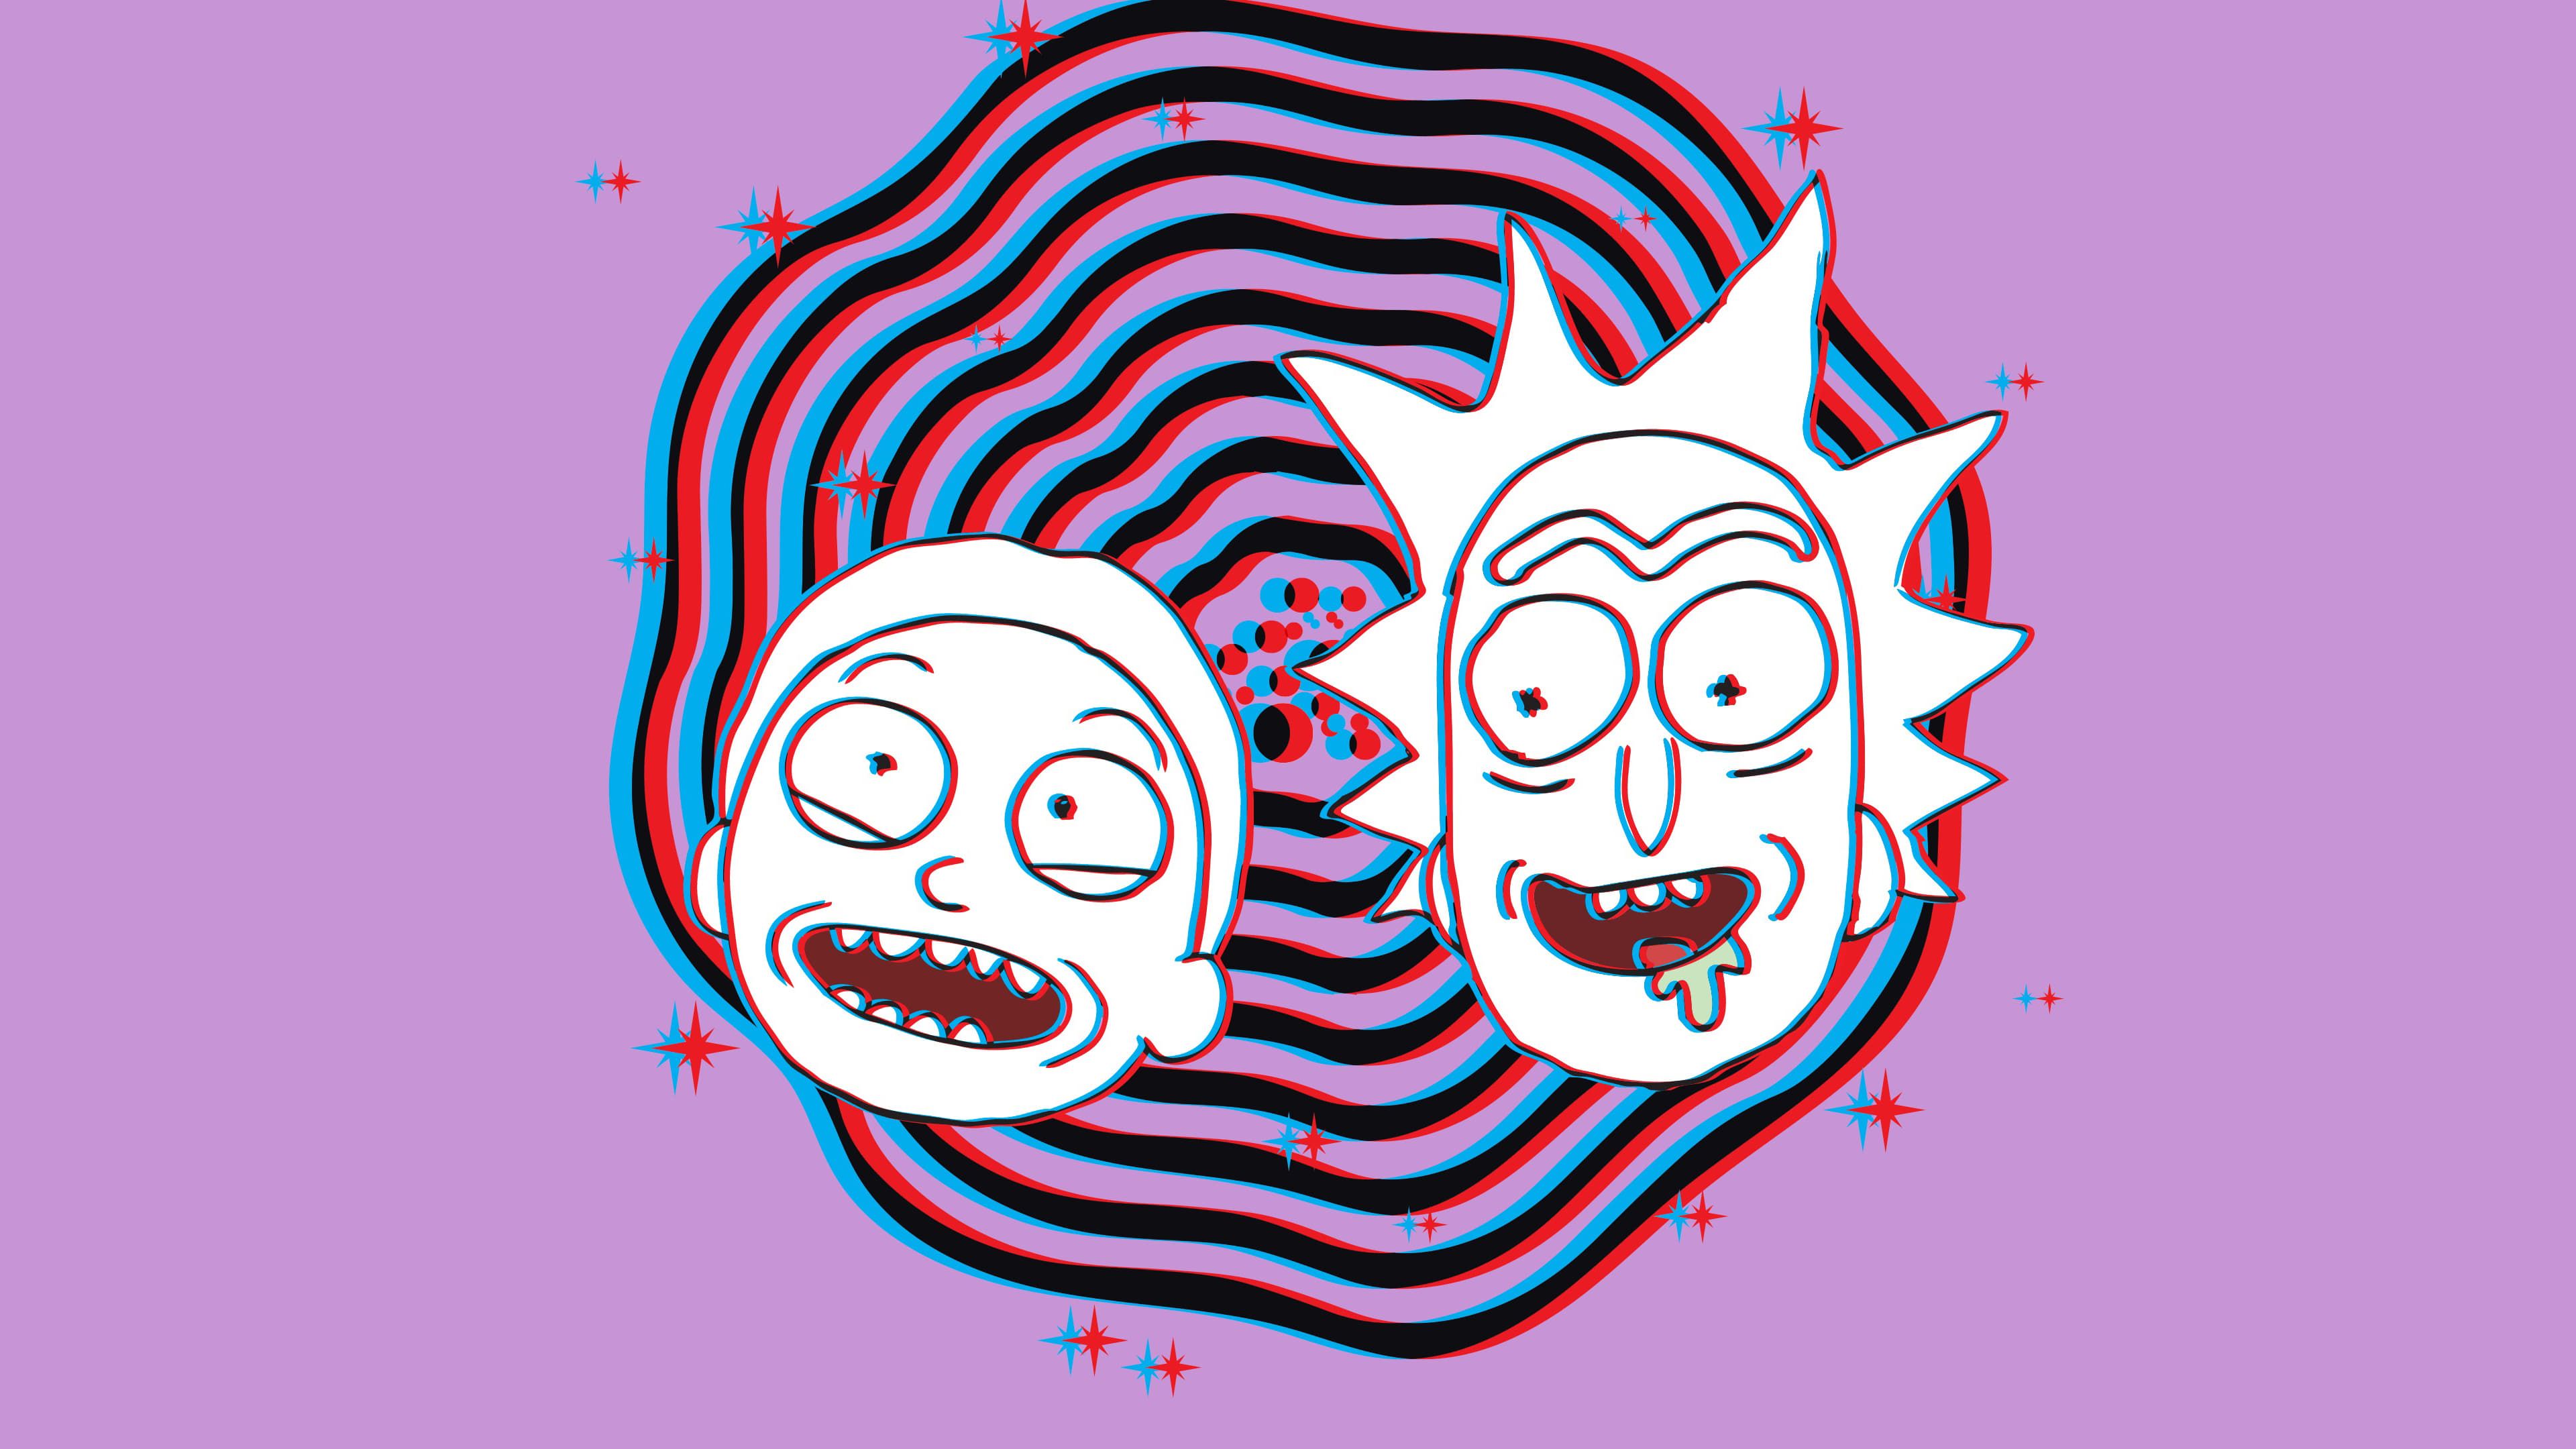 Rick and Morty 2020 Wallpaper, HD TV Series 4K Wallpaper, Image